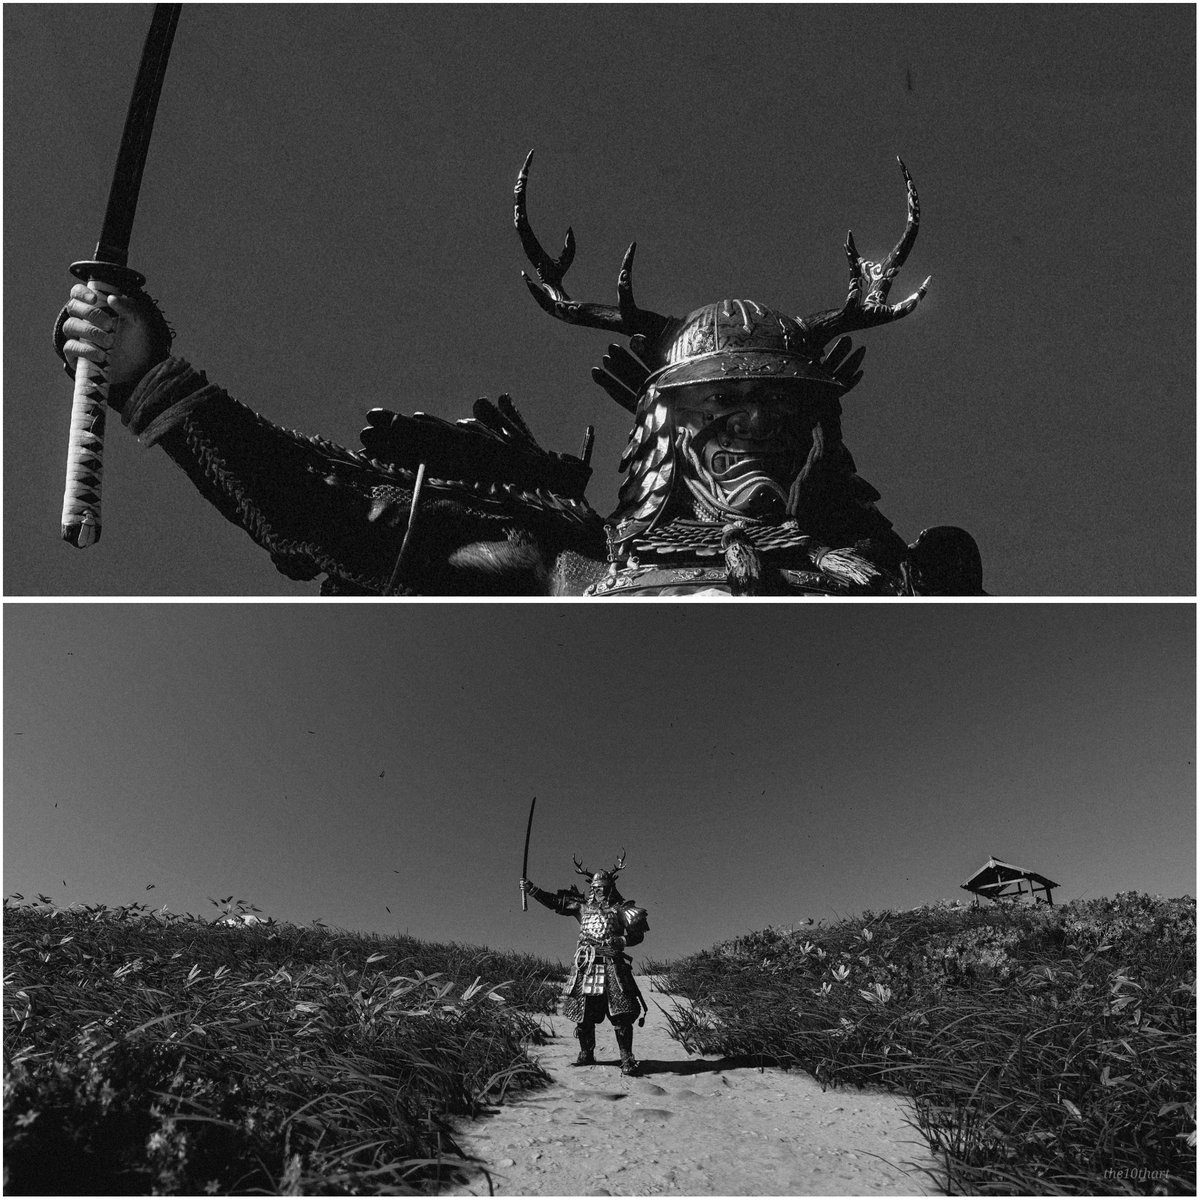 𝔾𝕙𝕠𝕤𝕥 𝕆𝕗 𝕋𝕤𝕦𝕤𝕙𝕚𝕞𝕒 '𝔻𝕚𝕣𝕖𝕔𝕥𝕠𝕣'𝕤 ℂ𝕦𝕥' @SuckerPunchProd #GhostOfTsushima #samourai #Jinsakai #VirtualPhotography #photomode #PlayStation5